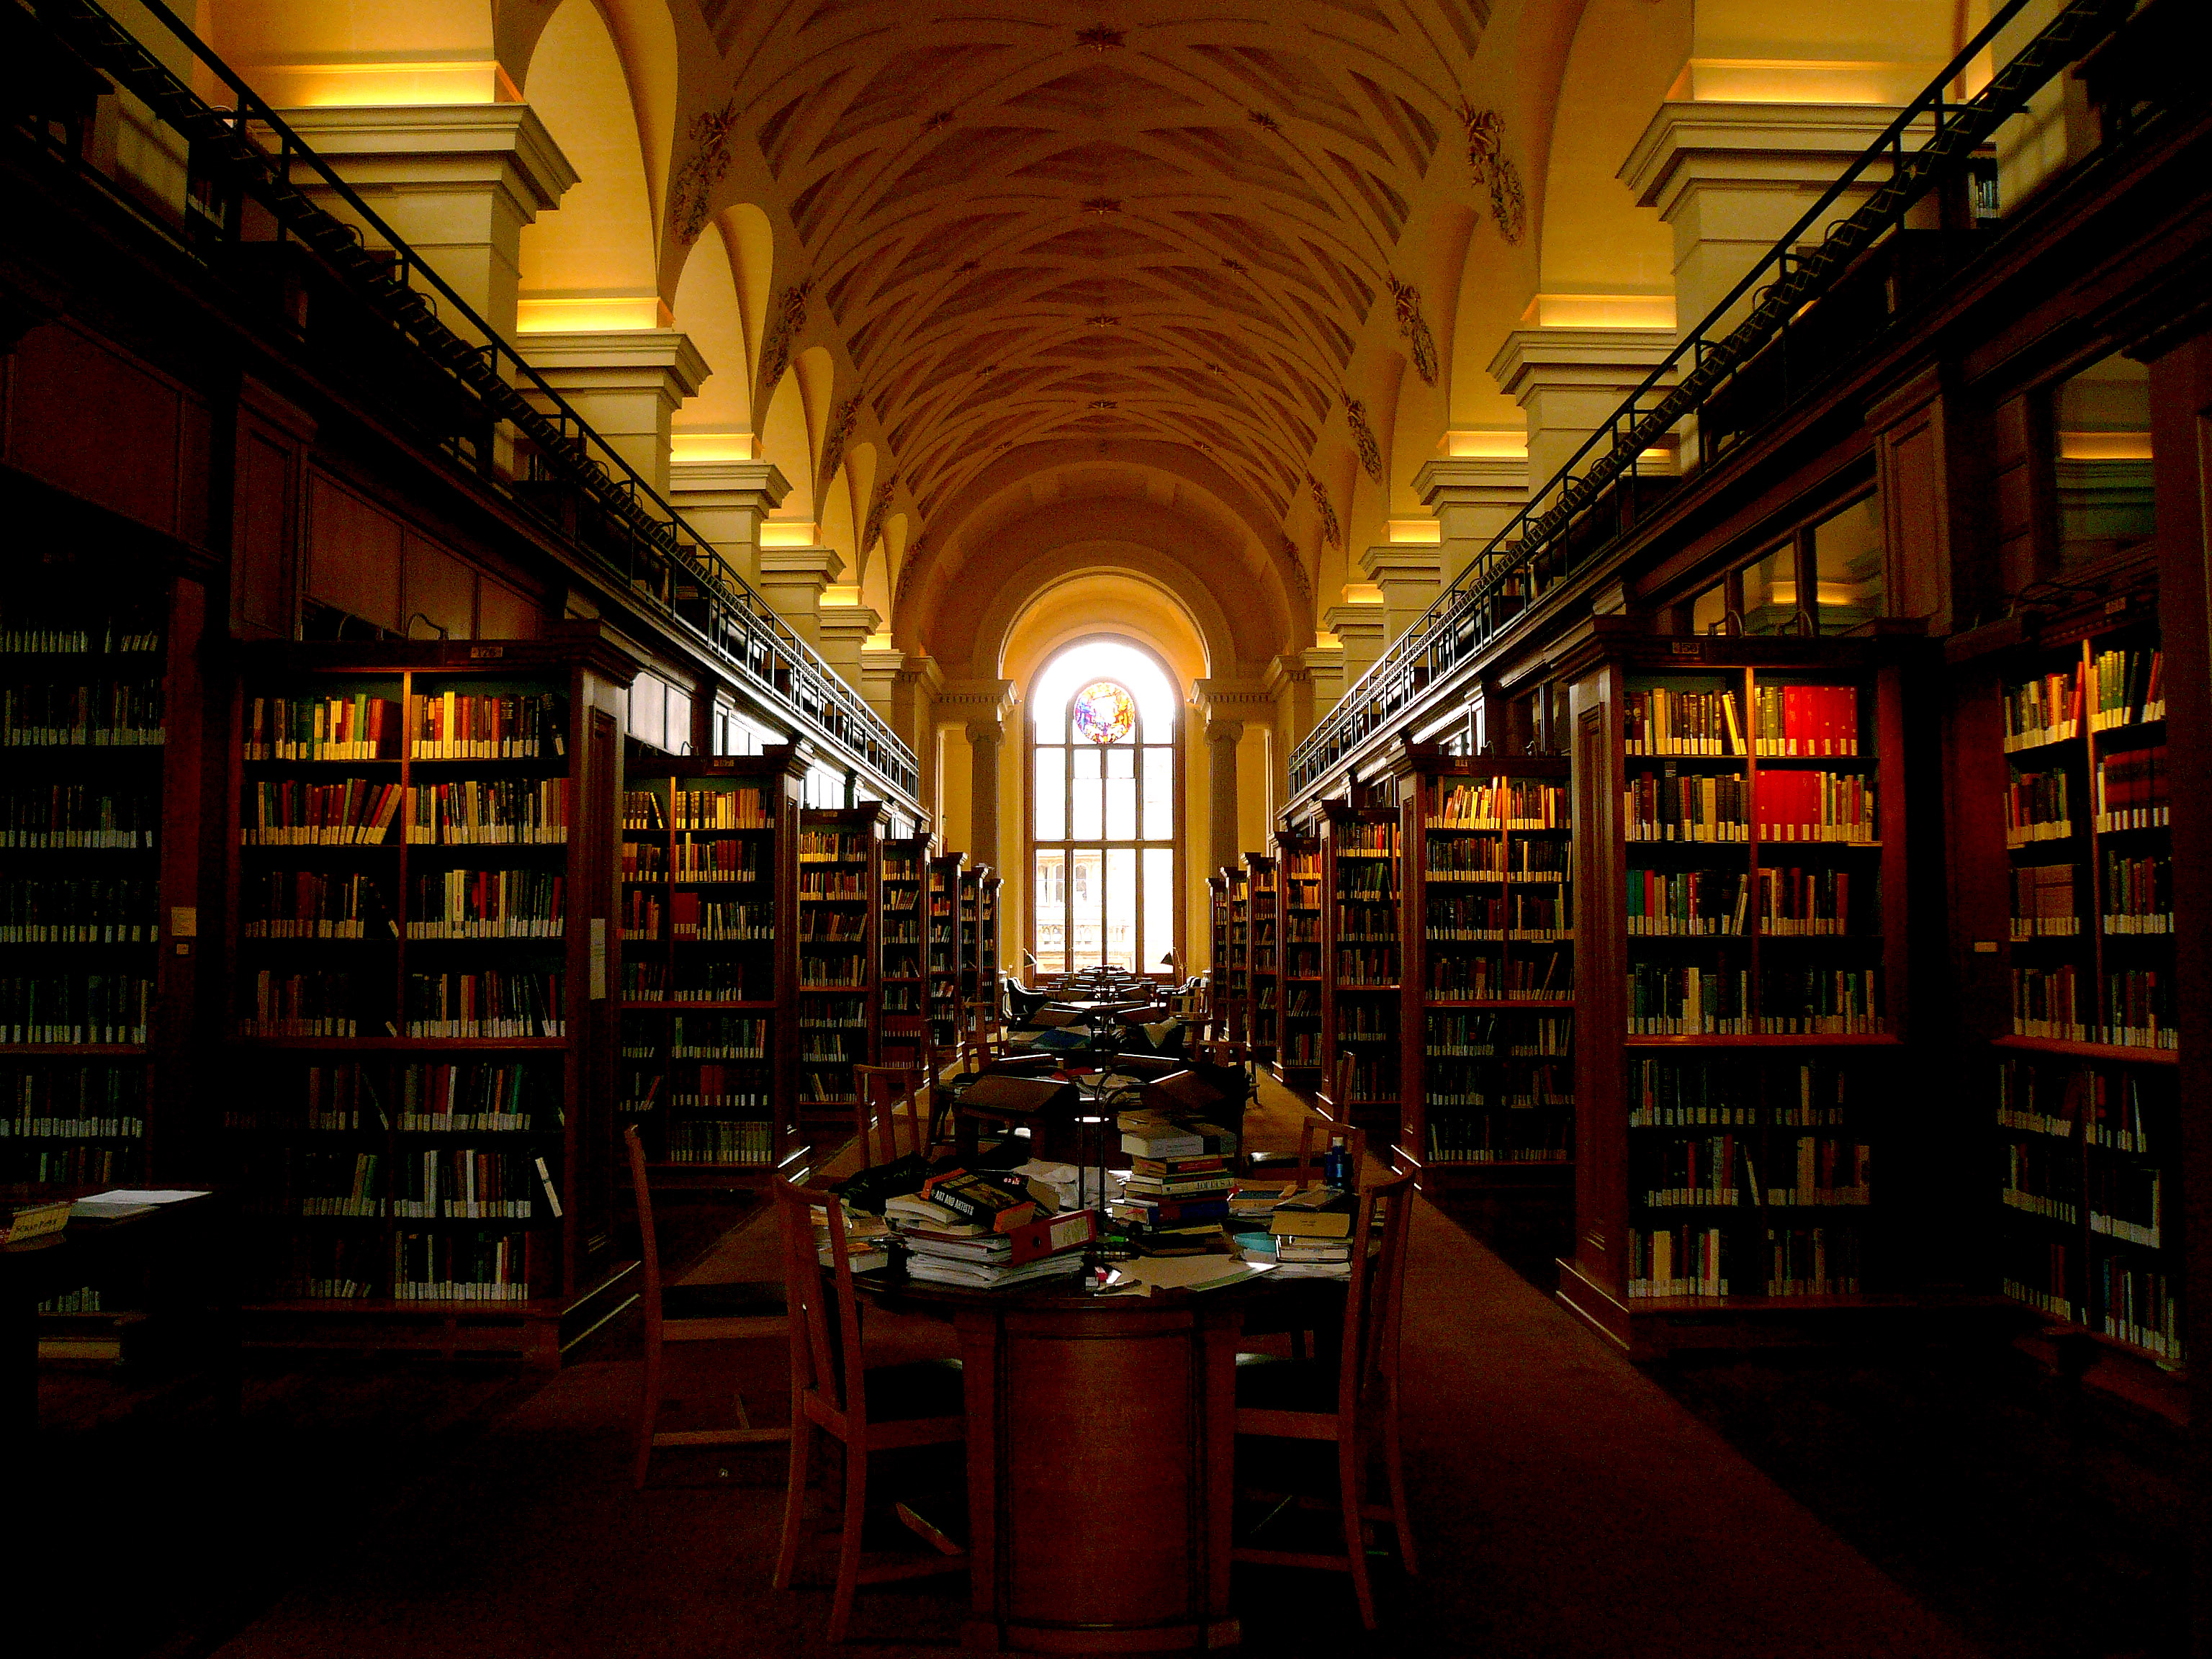 Library 1.7. Библиотека Кембриджского университета. Кембриджская Университетская библиотека. Кембридж университет библиотека. Кембриджский университет внутри библиотека.